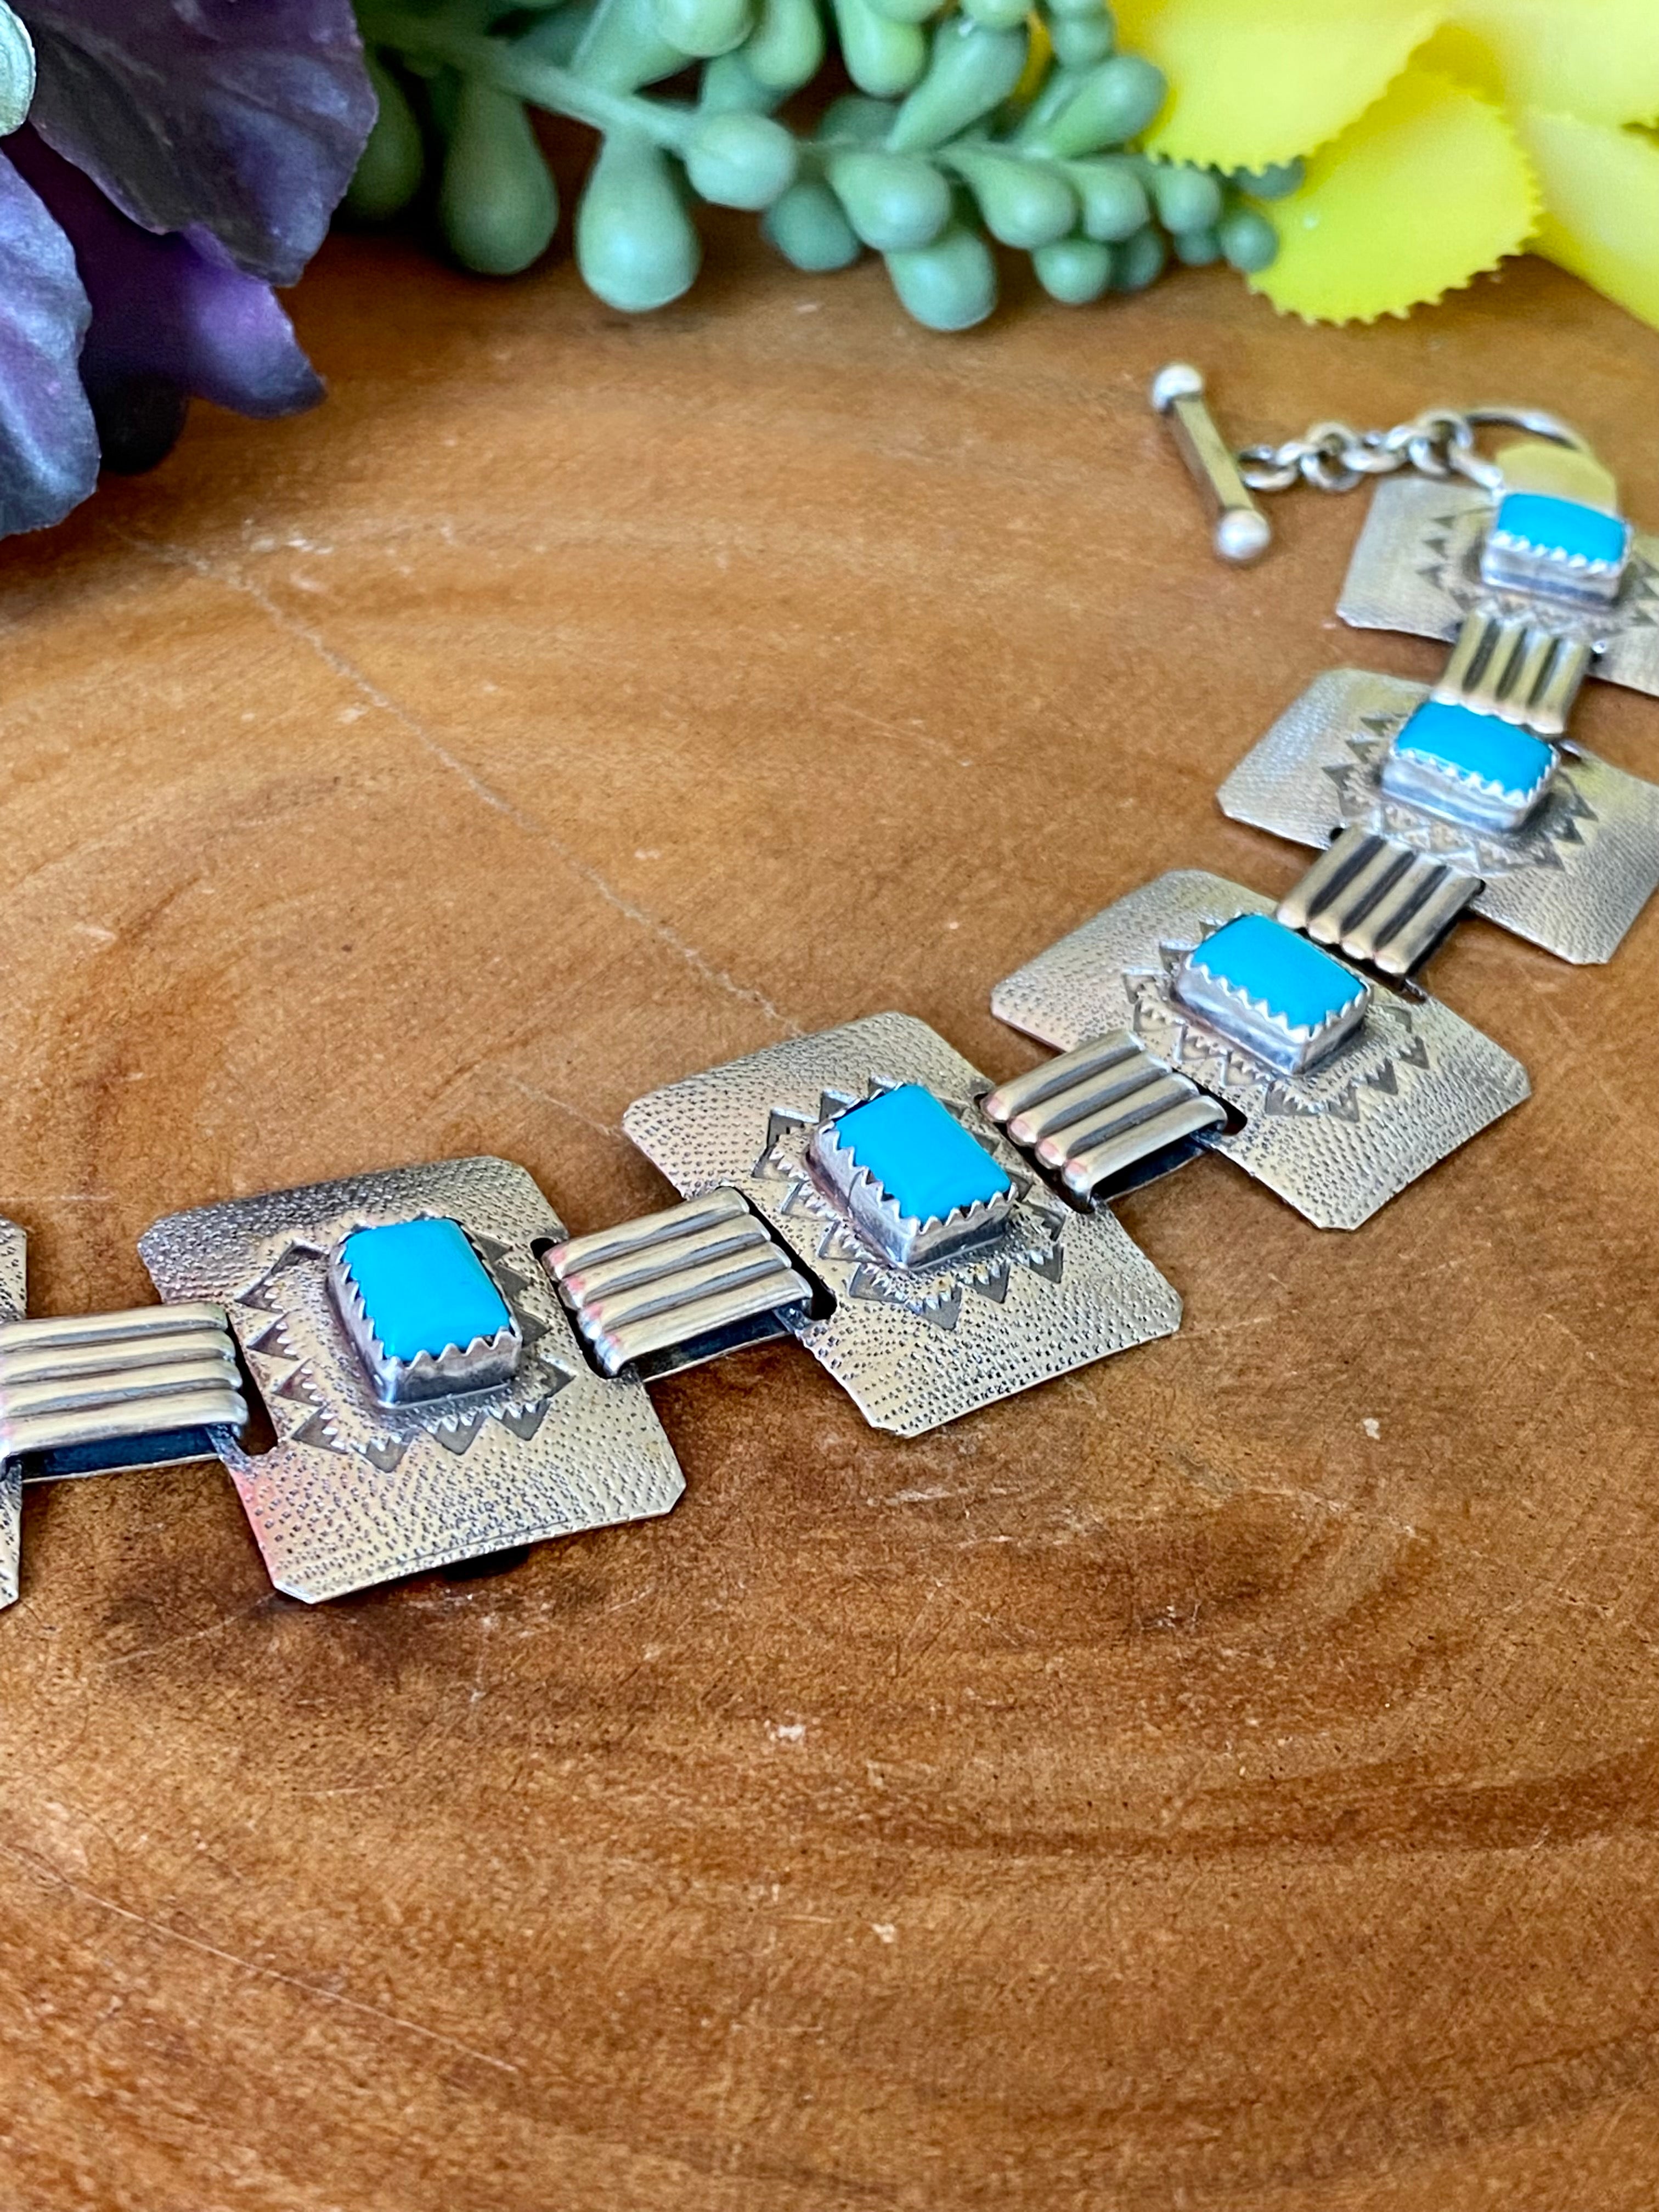 Navajo Made Sleeping Beauty Turquoise & Sterling Silver Link Bracelet